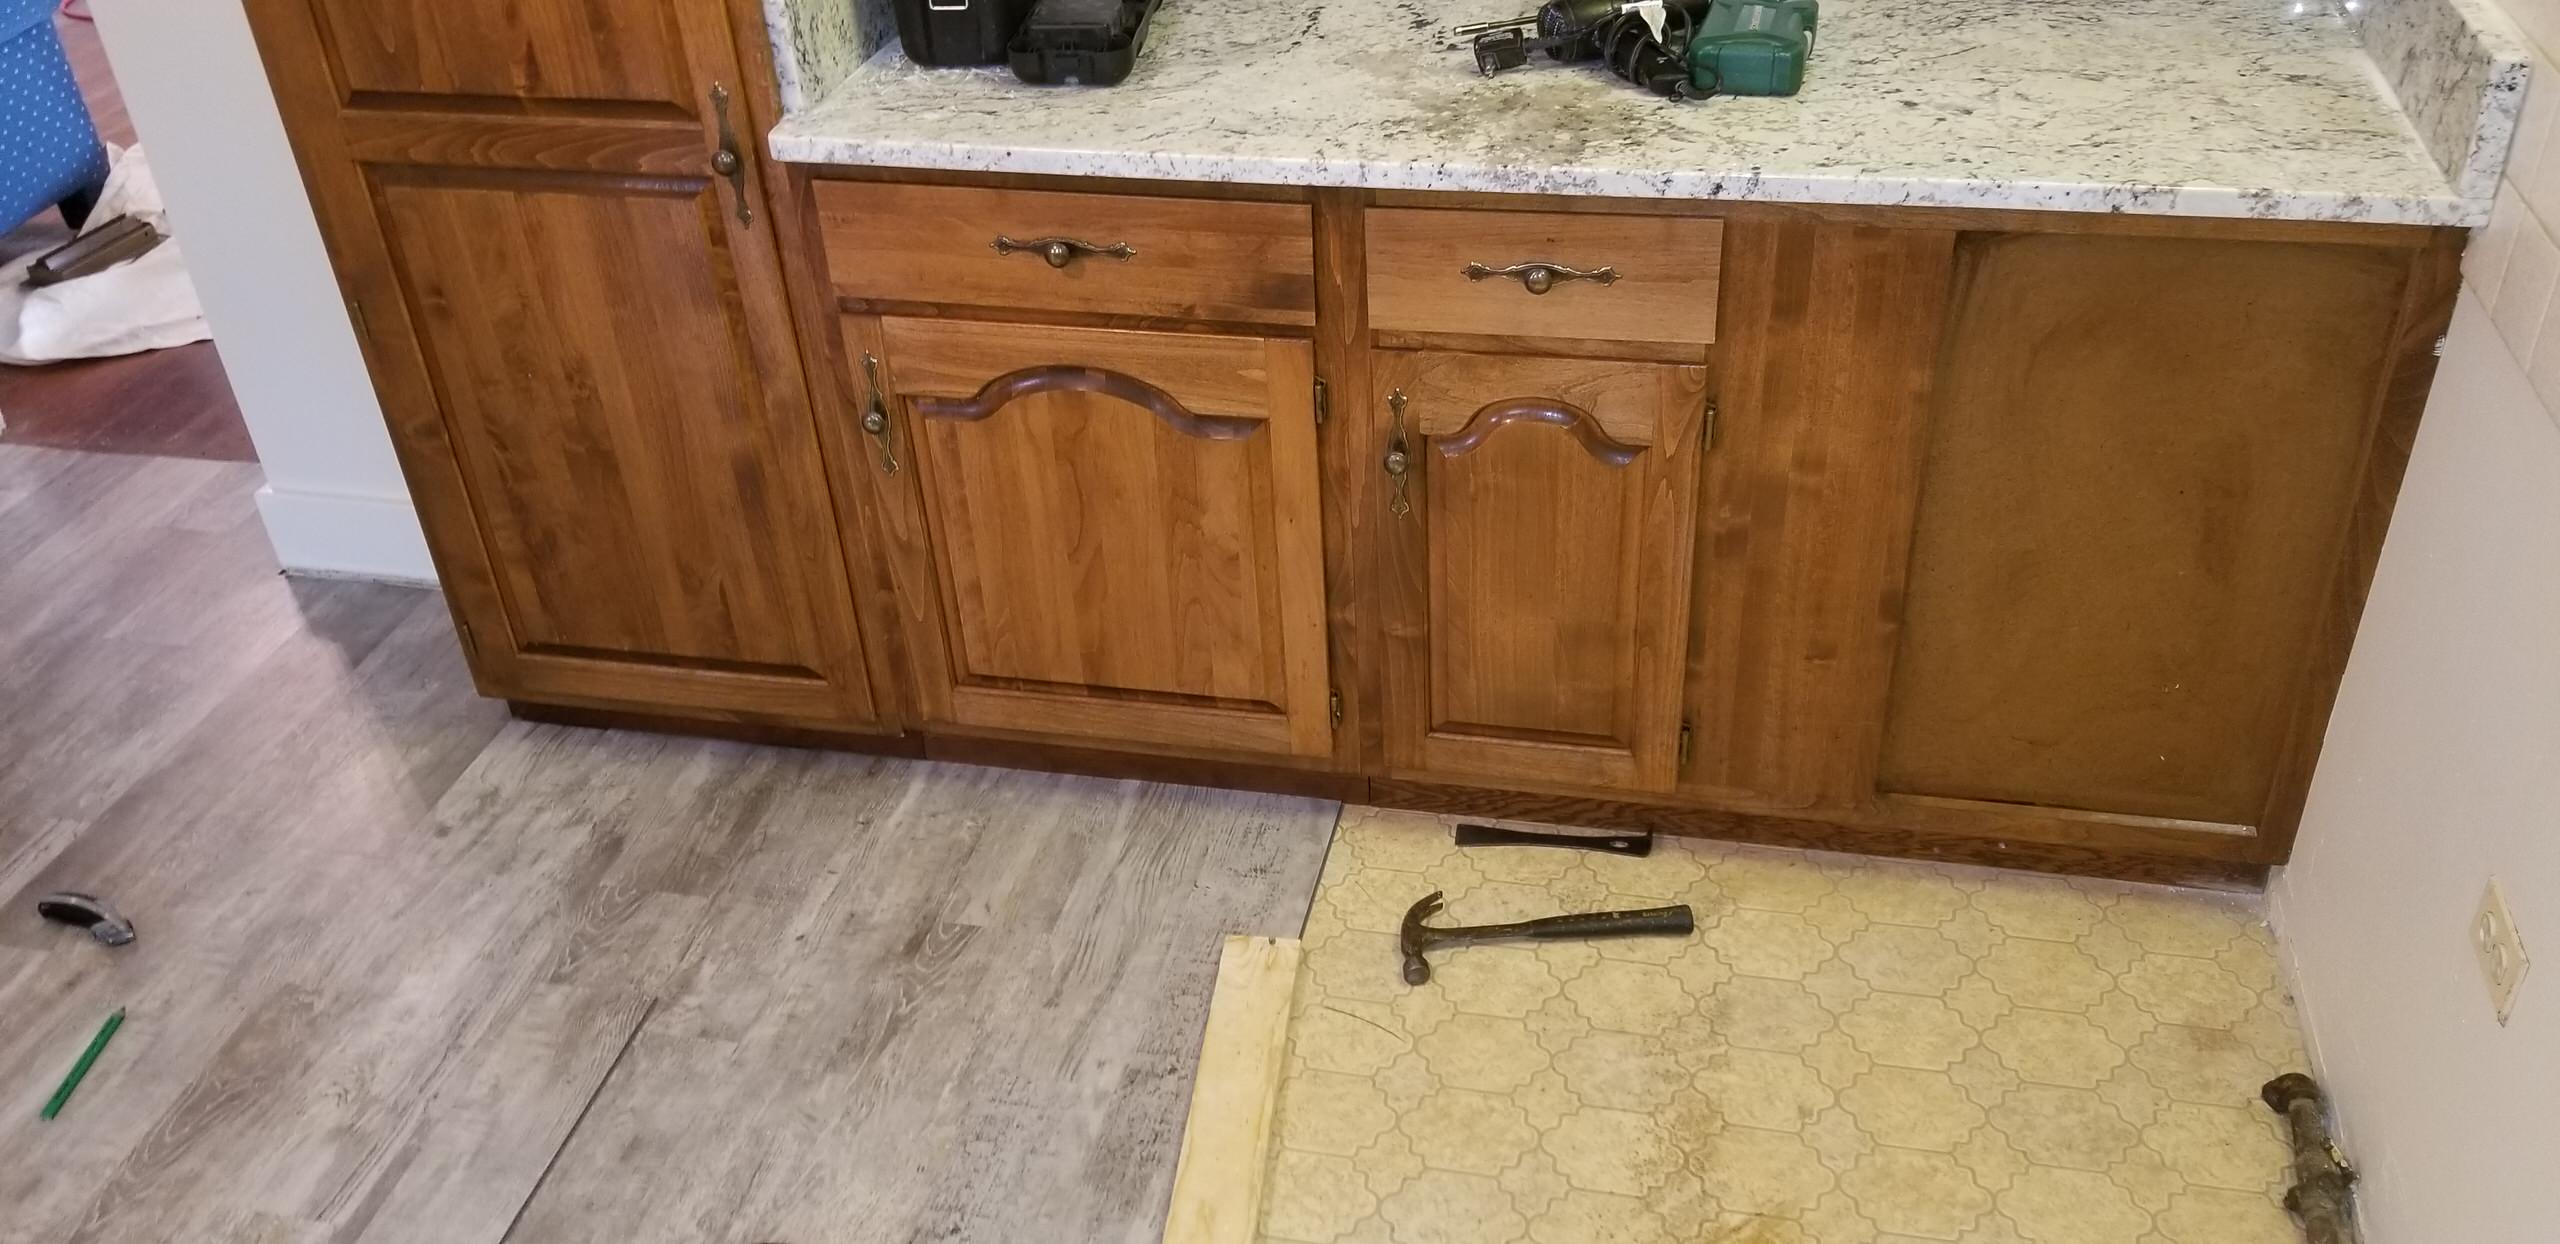 New vinyl plank flooring in a summer home kitchen